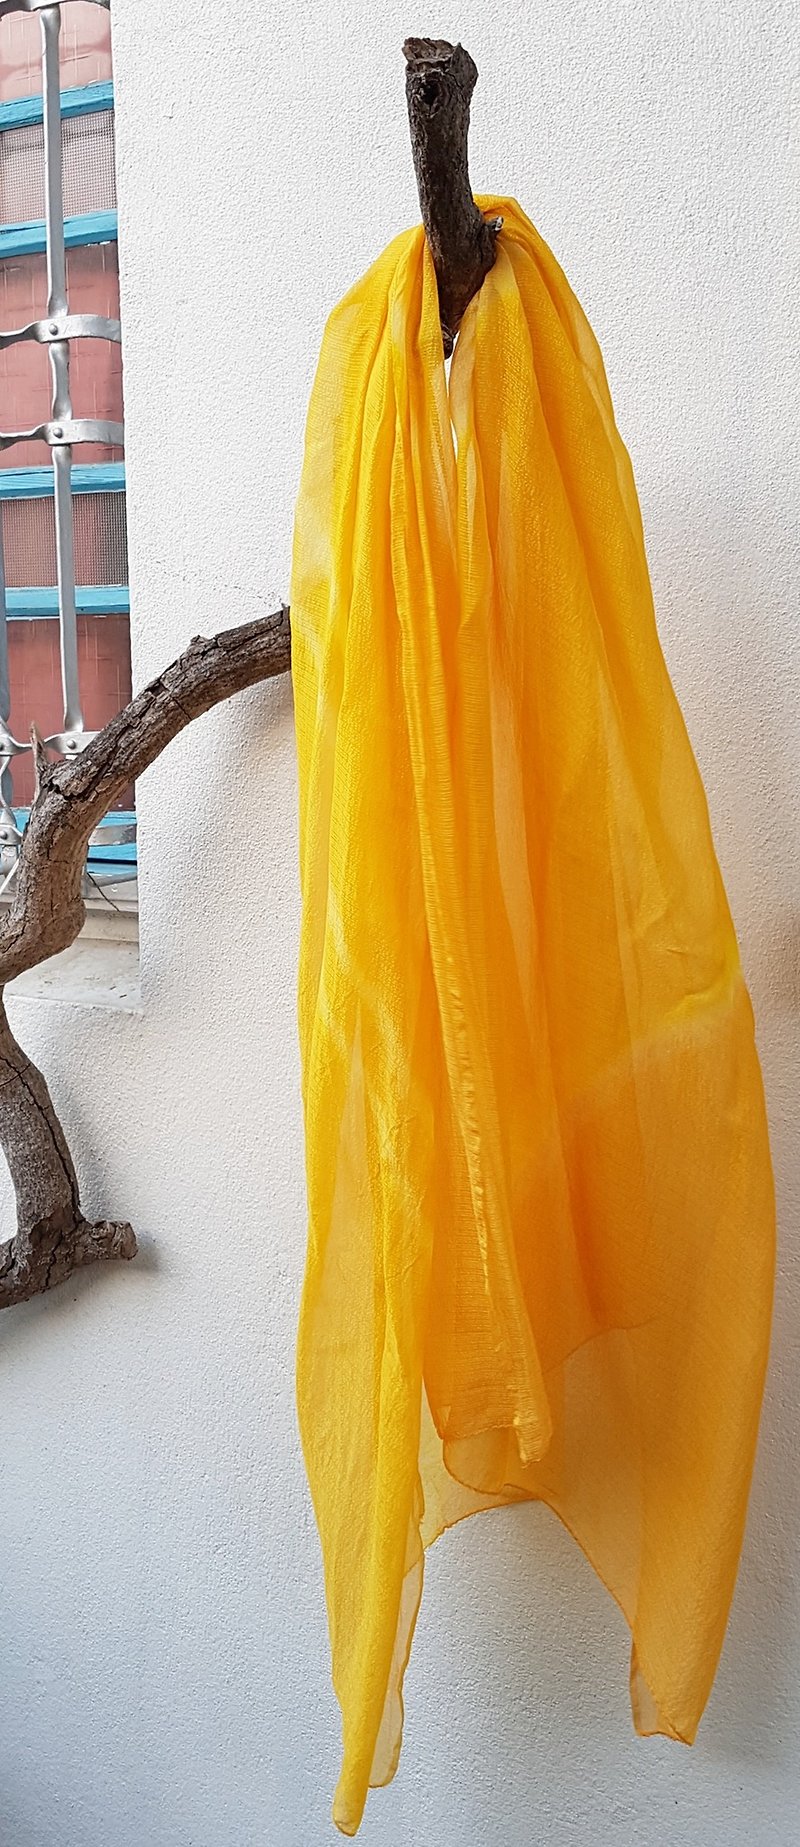 Chun Ji naturally dyed silk scarf - Sun Wen Qing Yi commodity fantasy gifts for personal use beautiful things - Scarves - Silk Orange